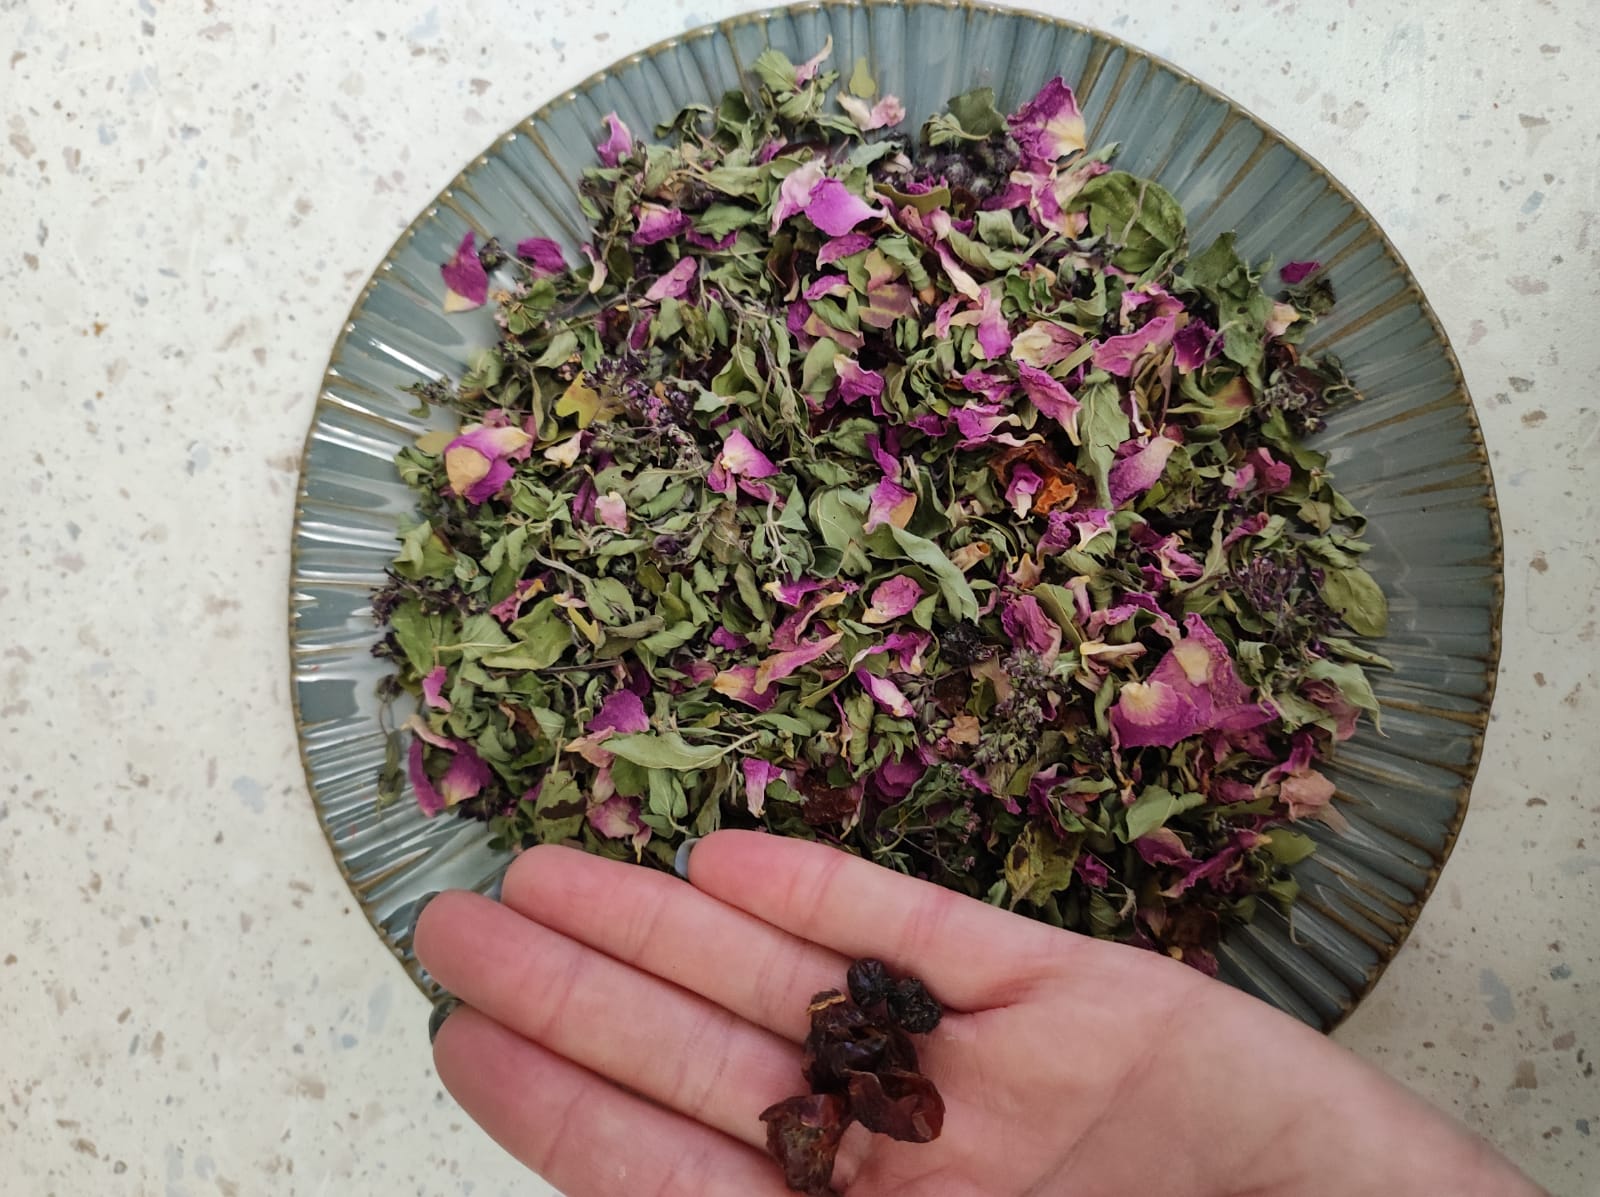 Darman Tea No17 - Mountain Breeze (Black Currant Fruits and Leaves, Rosehip, Rose Petals, Oregano)